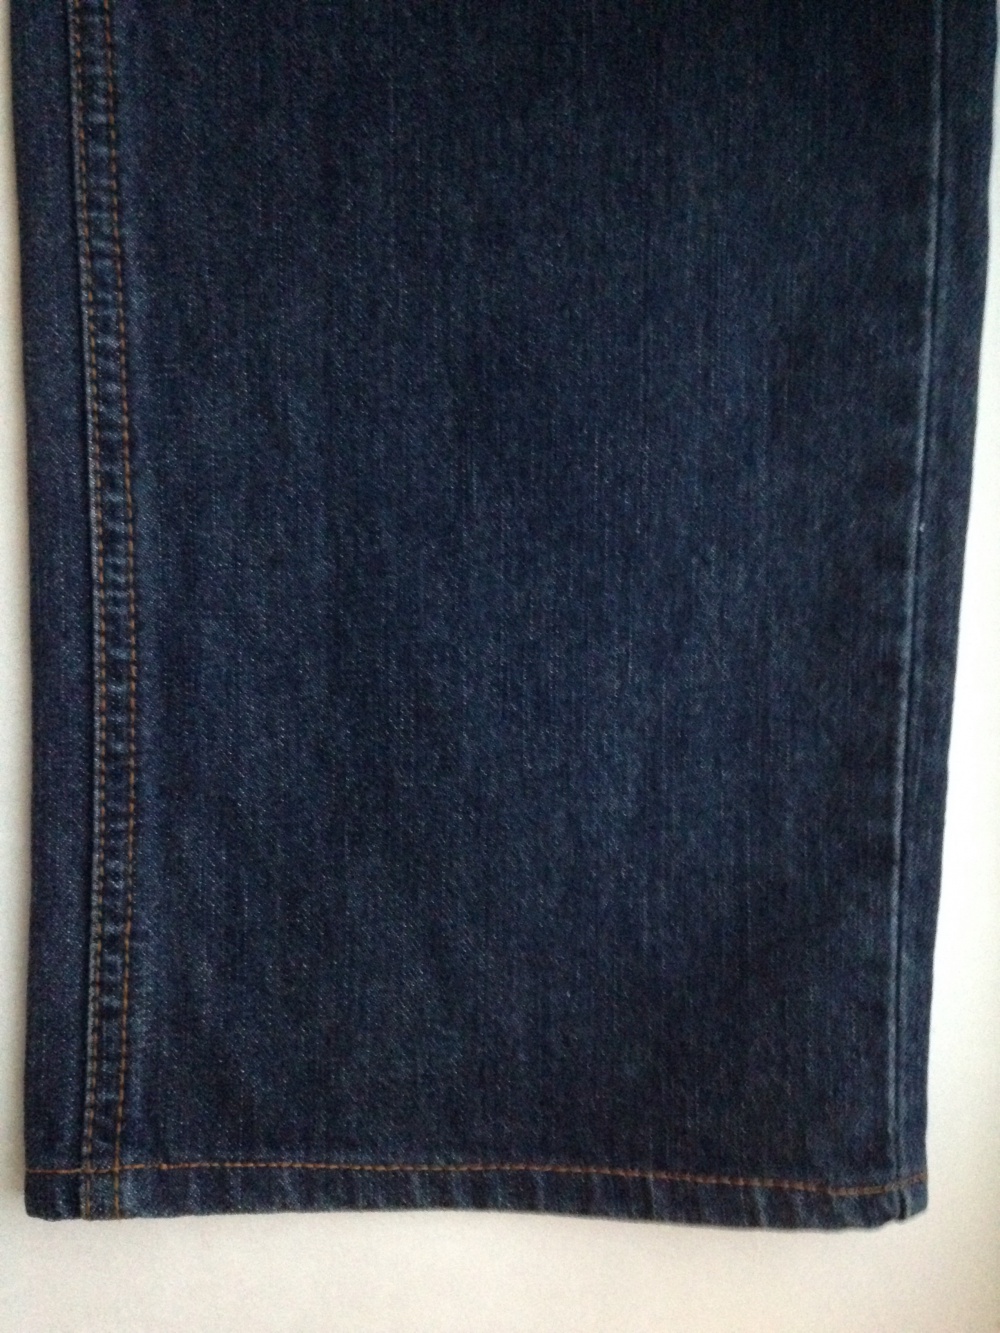 Мужские джинсы " RIFLE ", 54-56 размер.